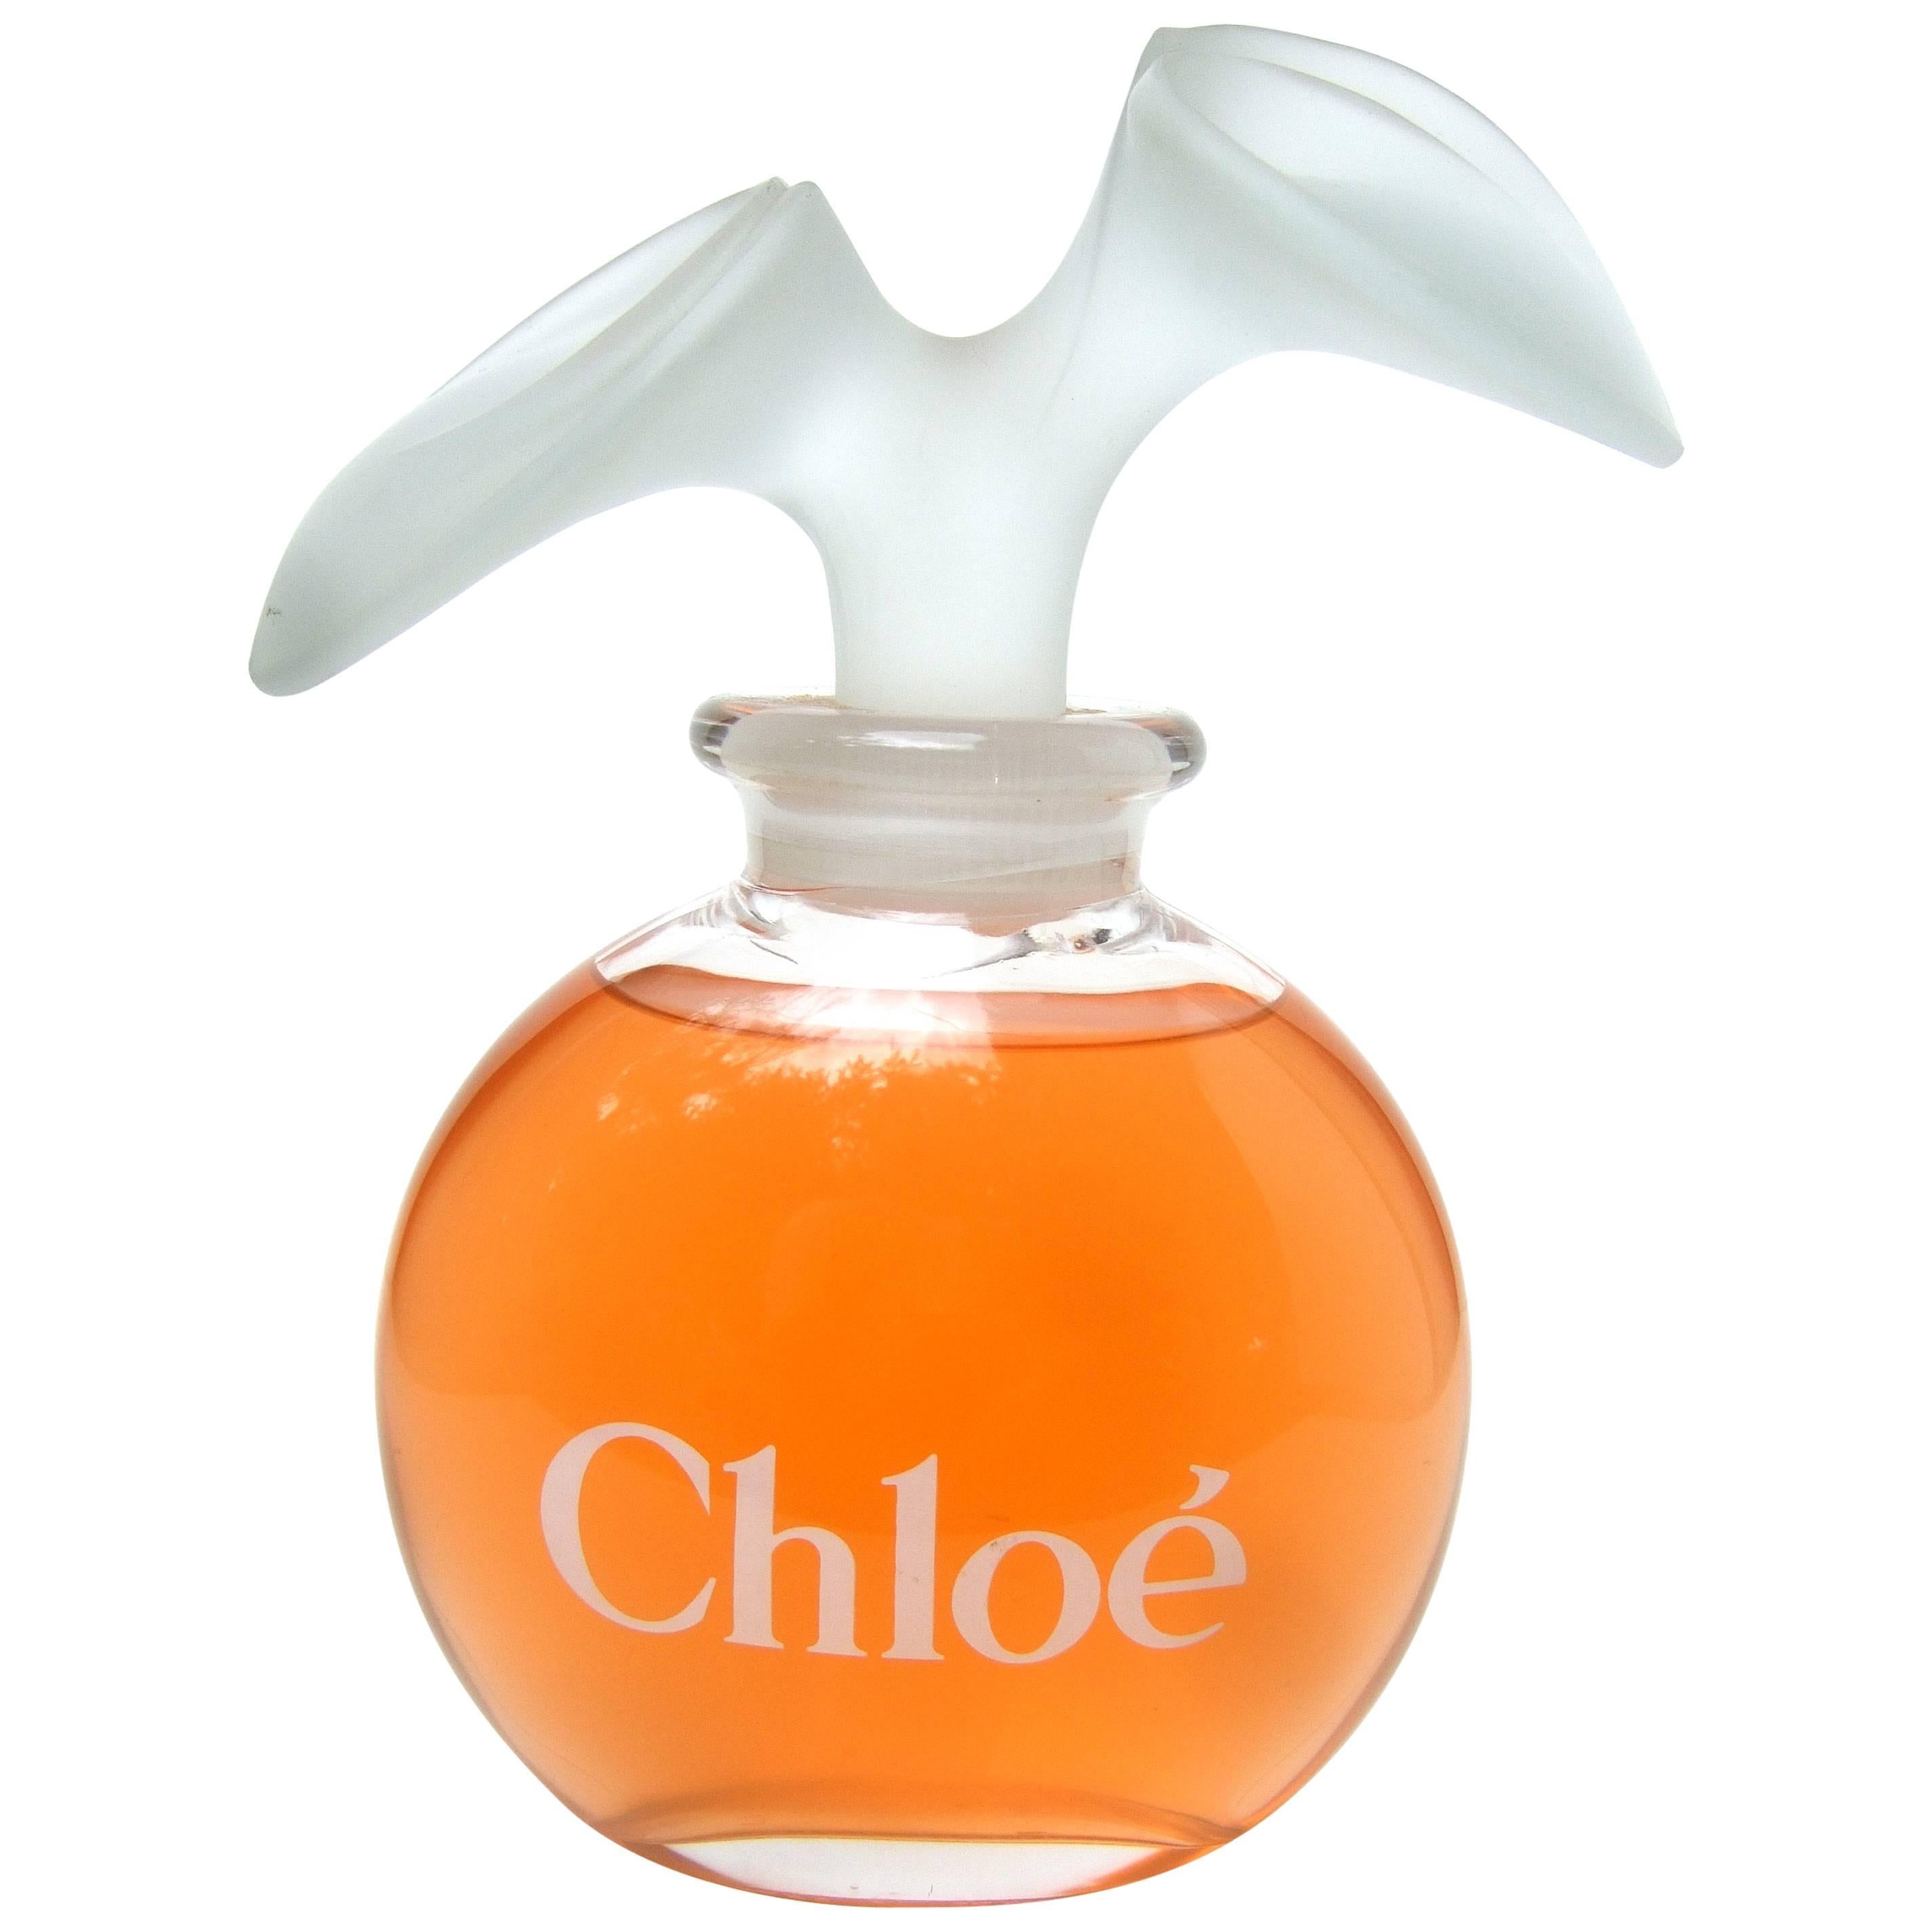 Chloe Large Glass Factice Fragrance Display Bottle 